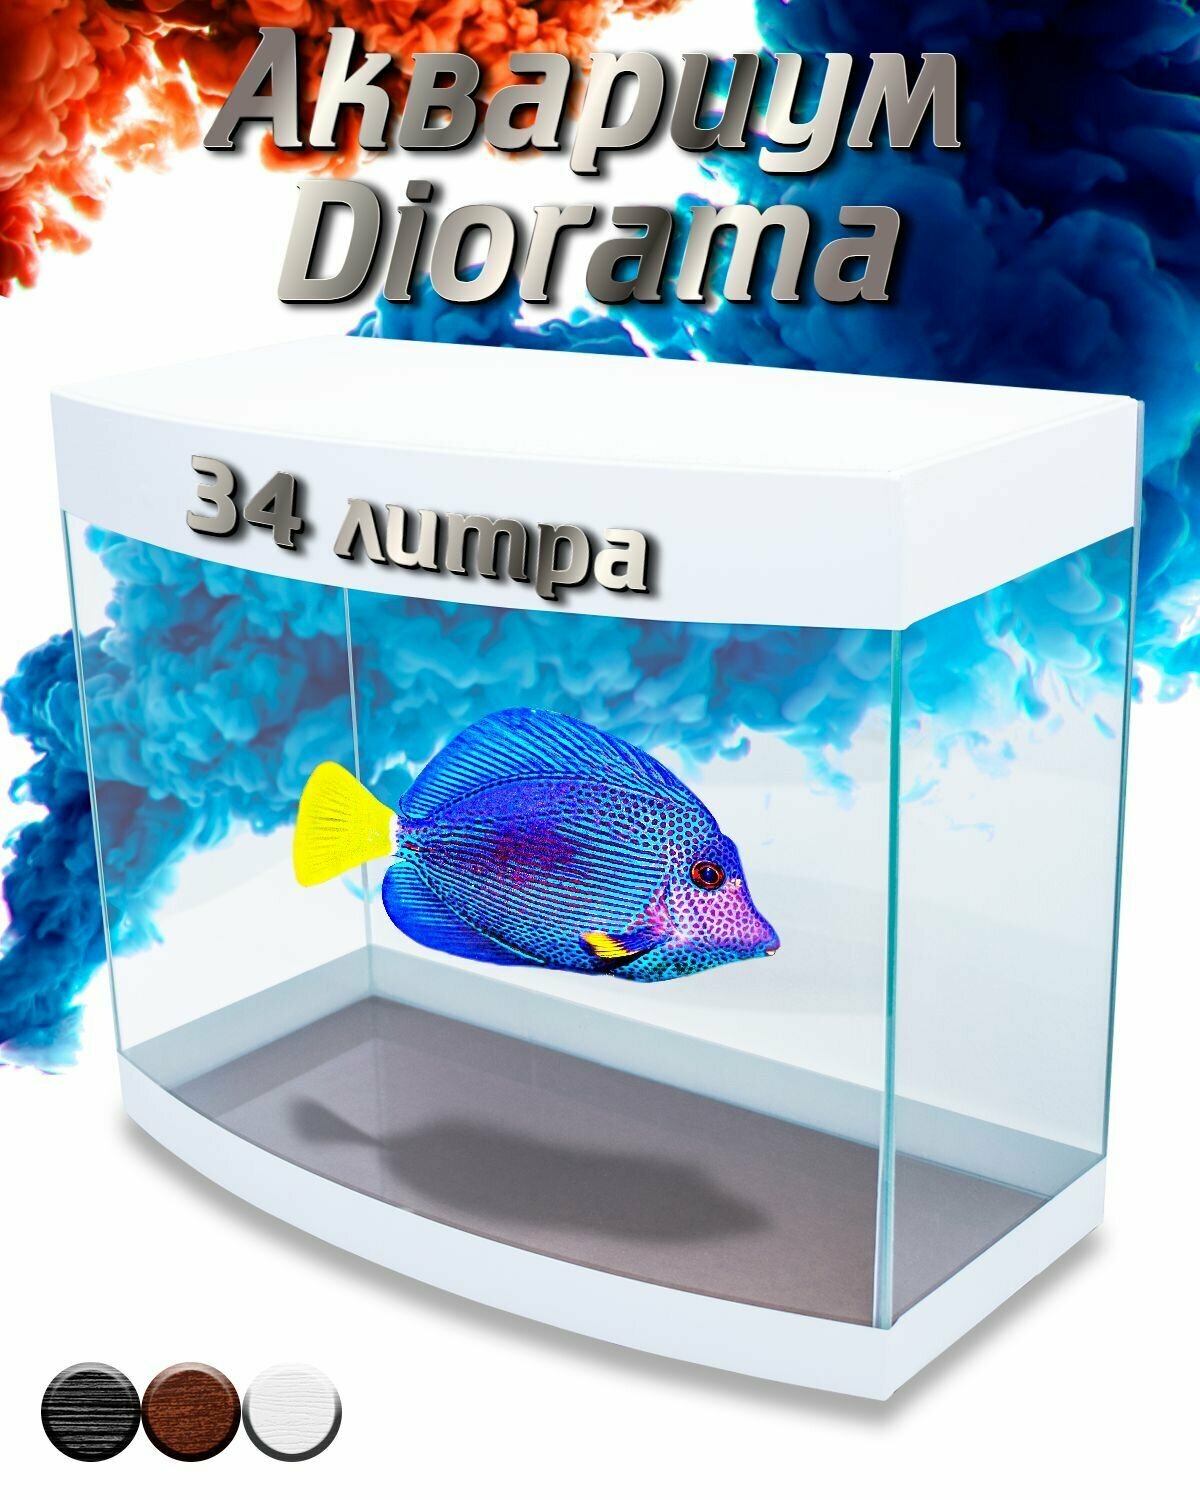 Аквариум для рыбок Diarama 34L White Edition V2.0